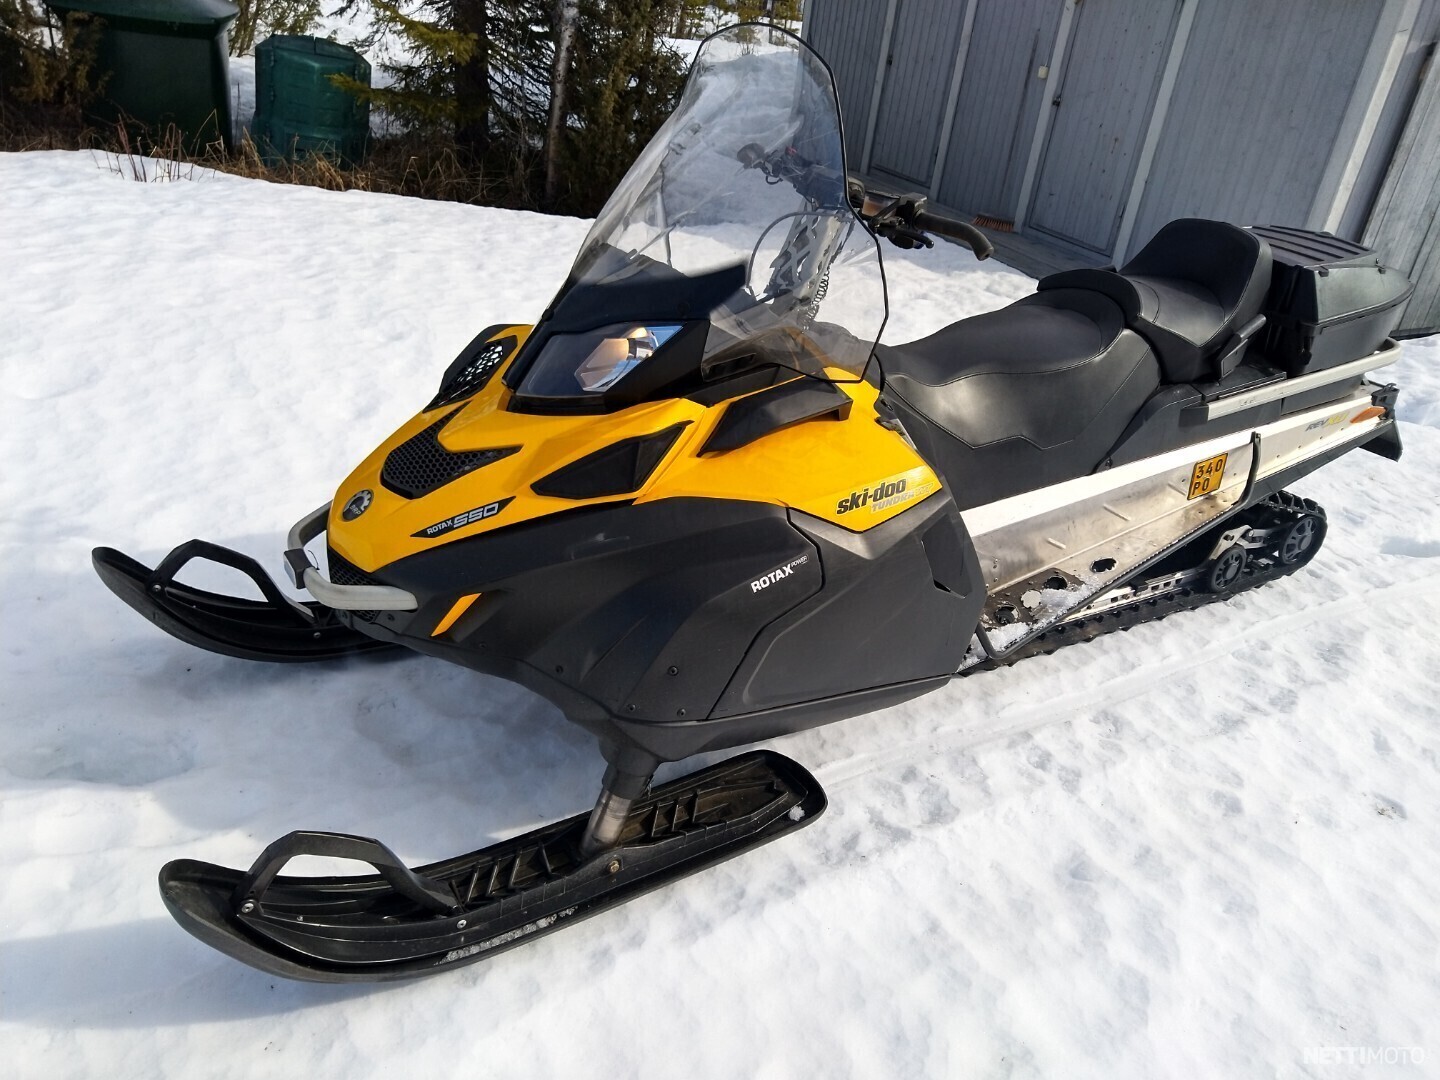 Ski-Doo Tundra LT 550F 550 cm³ 2015 - Enontekiö - Snow mobile 